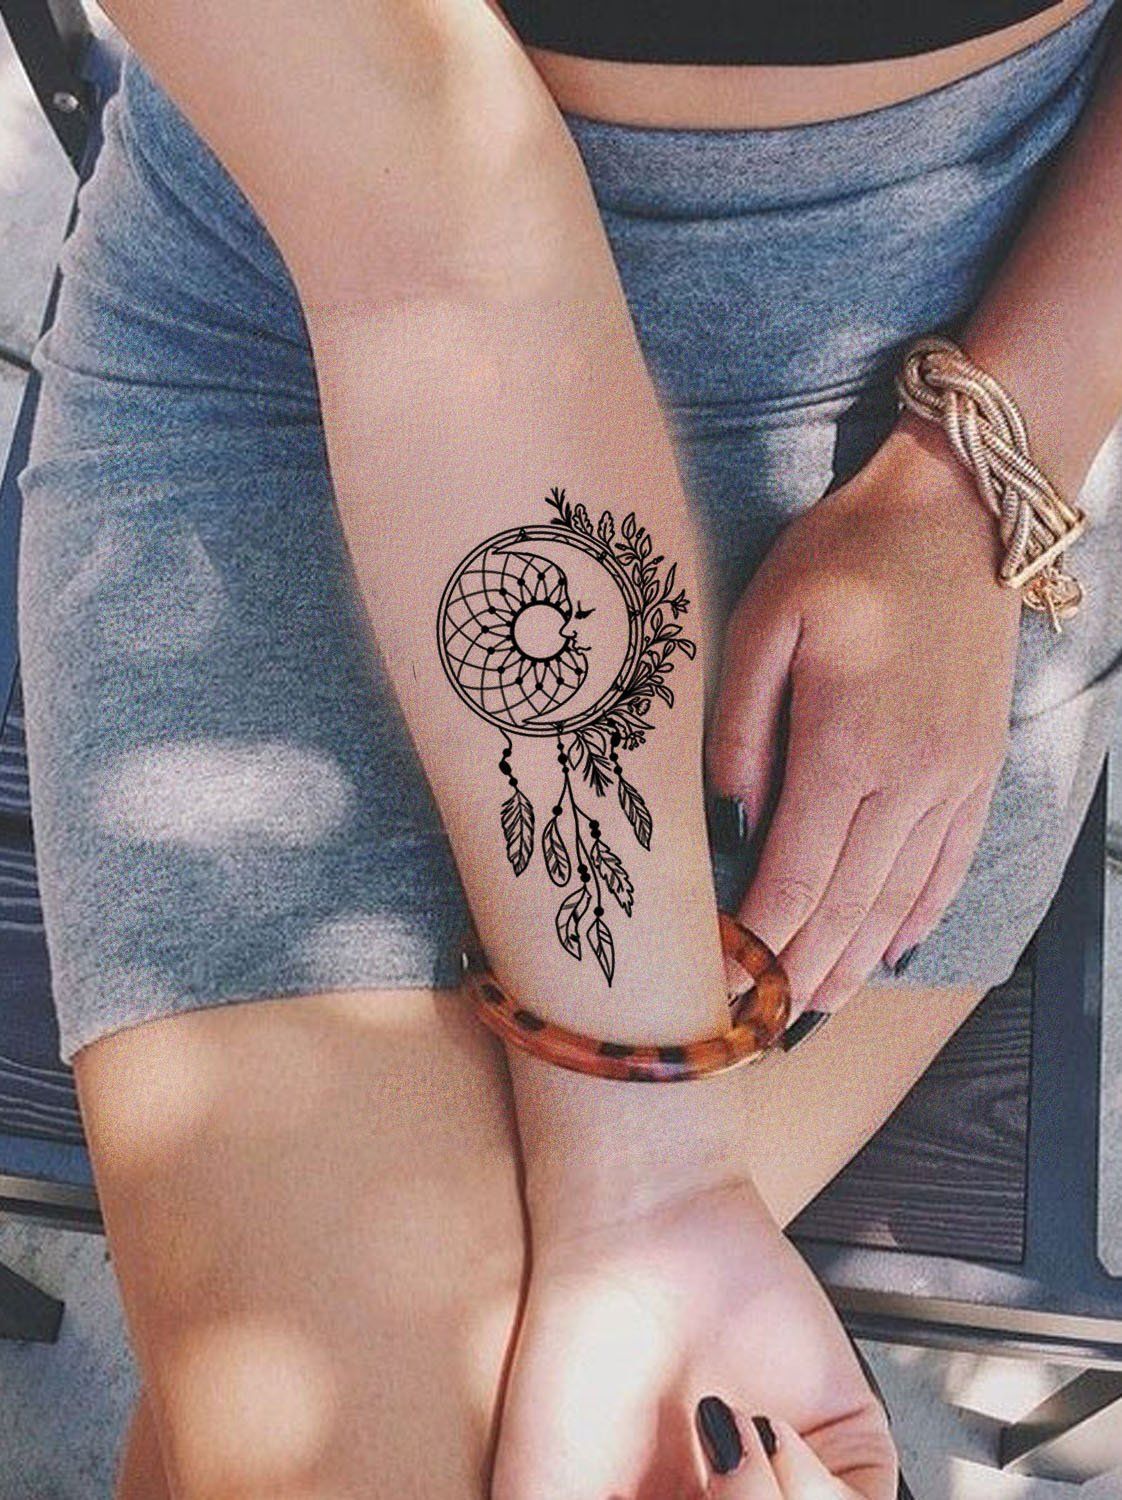 Female Wrist Tattoo Ideas Small Designs (33)